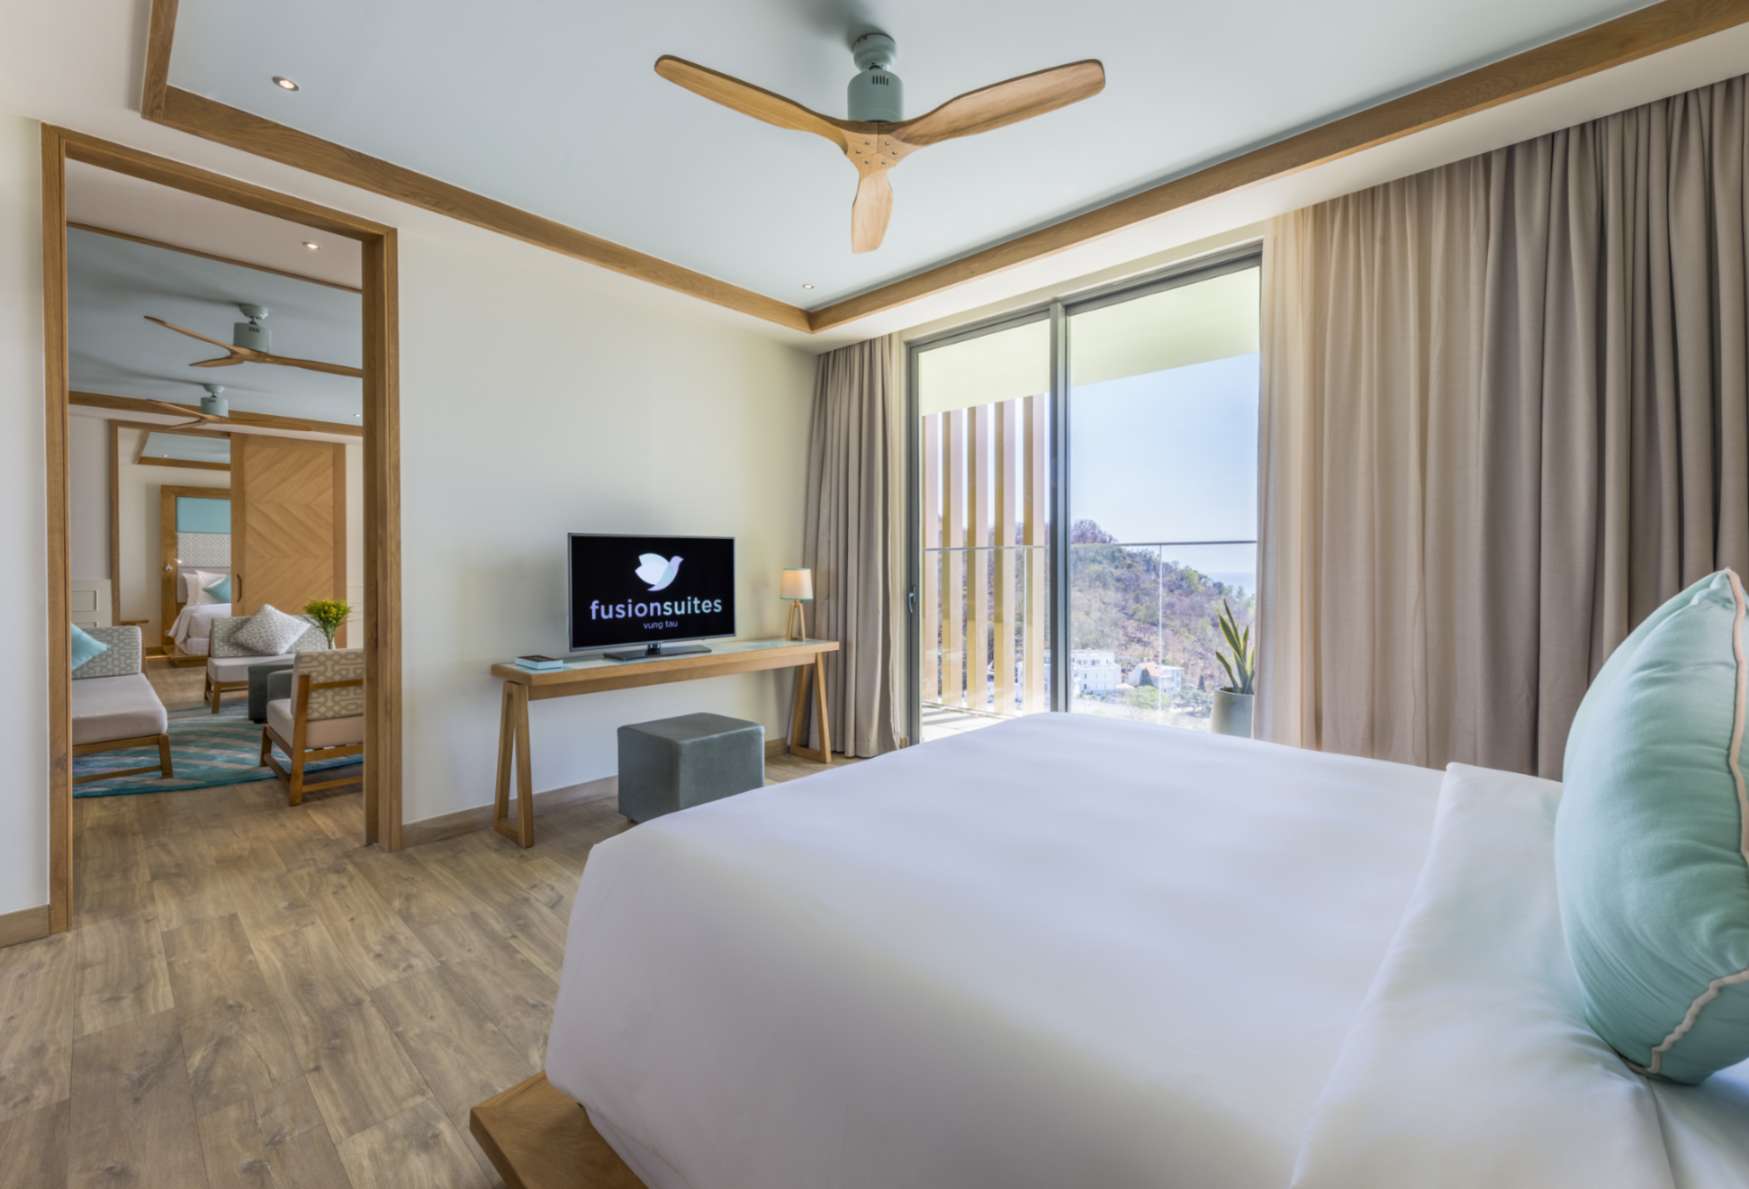 Fusion 2 Bedroom Apartment - Spa Inclusive Sea View,partial - Fusion Suites Vung Tau